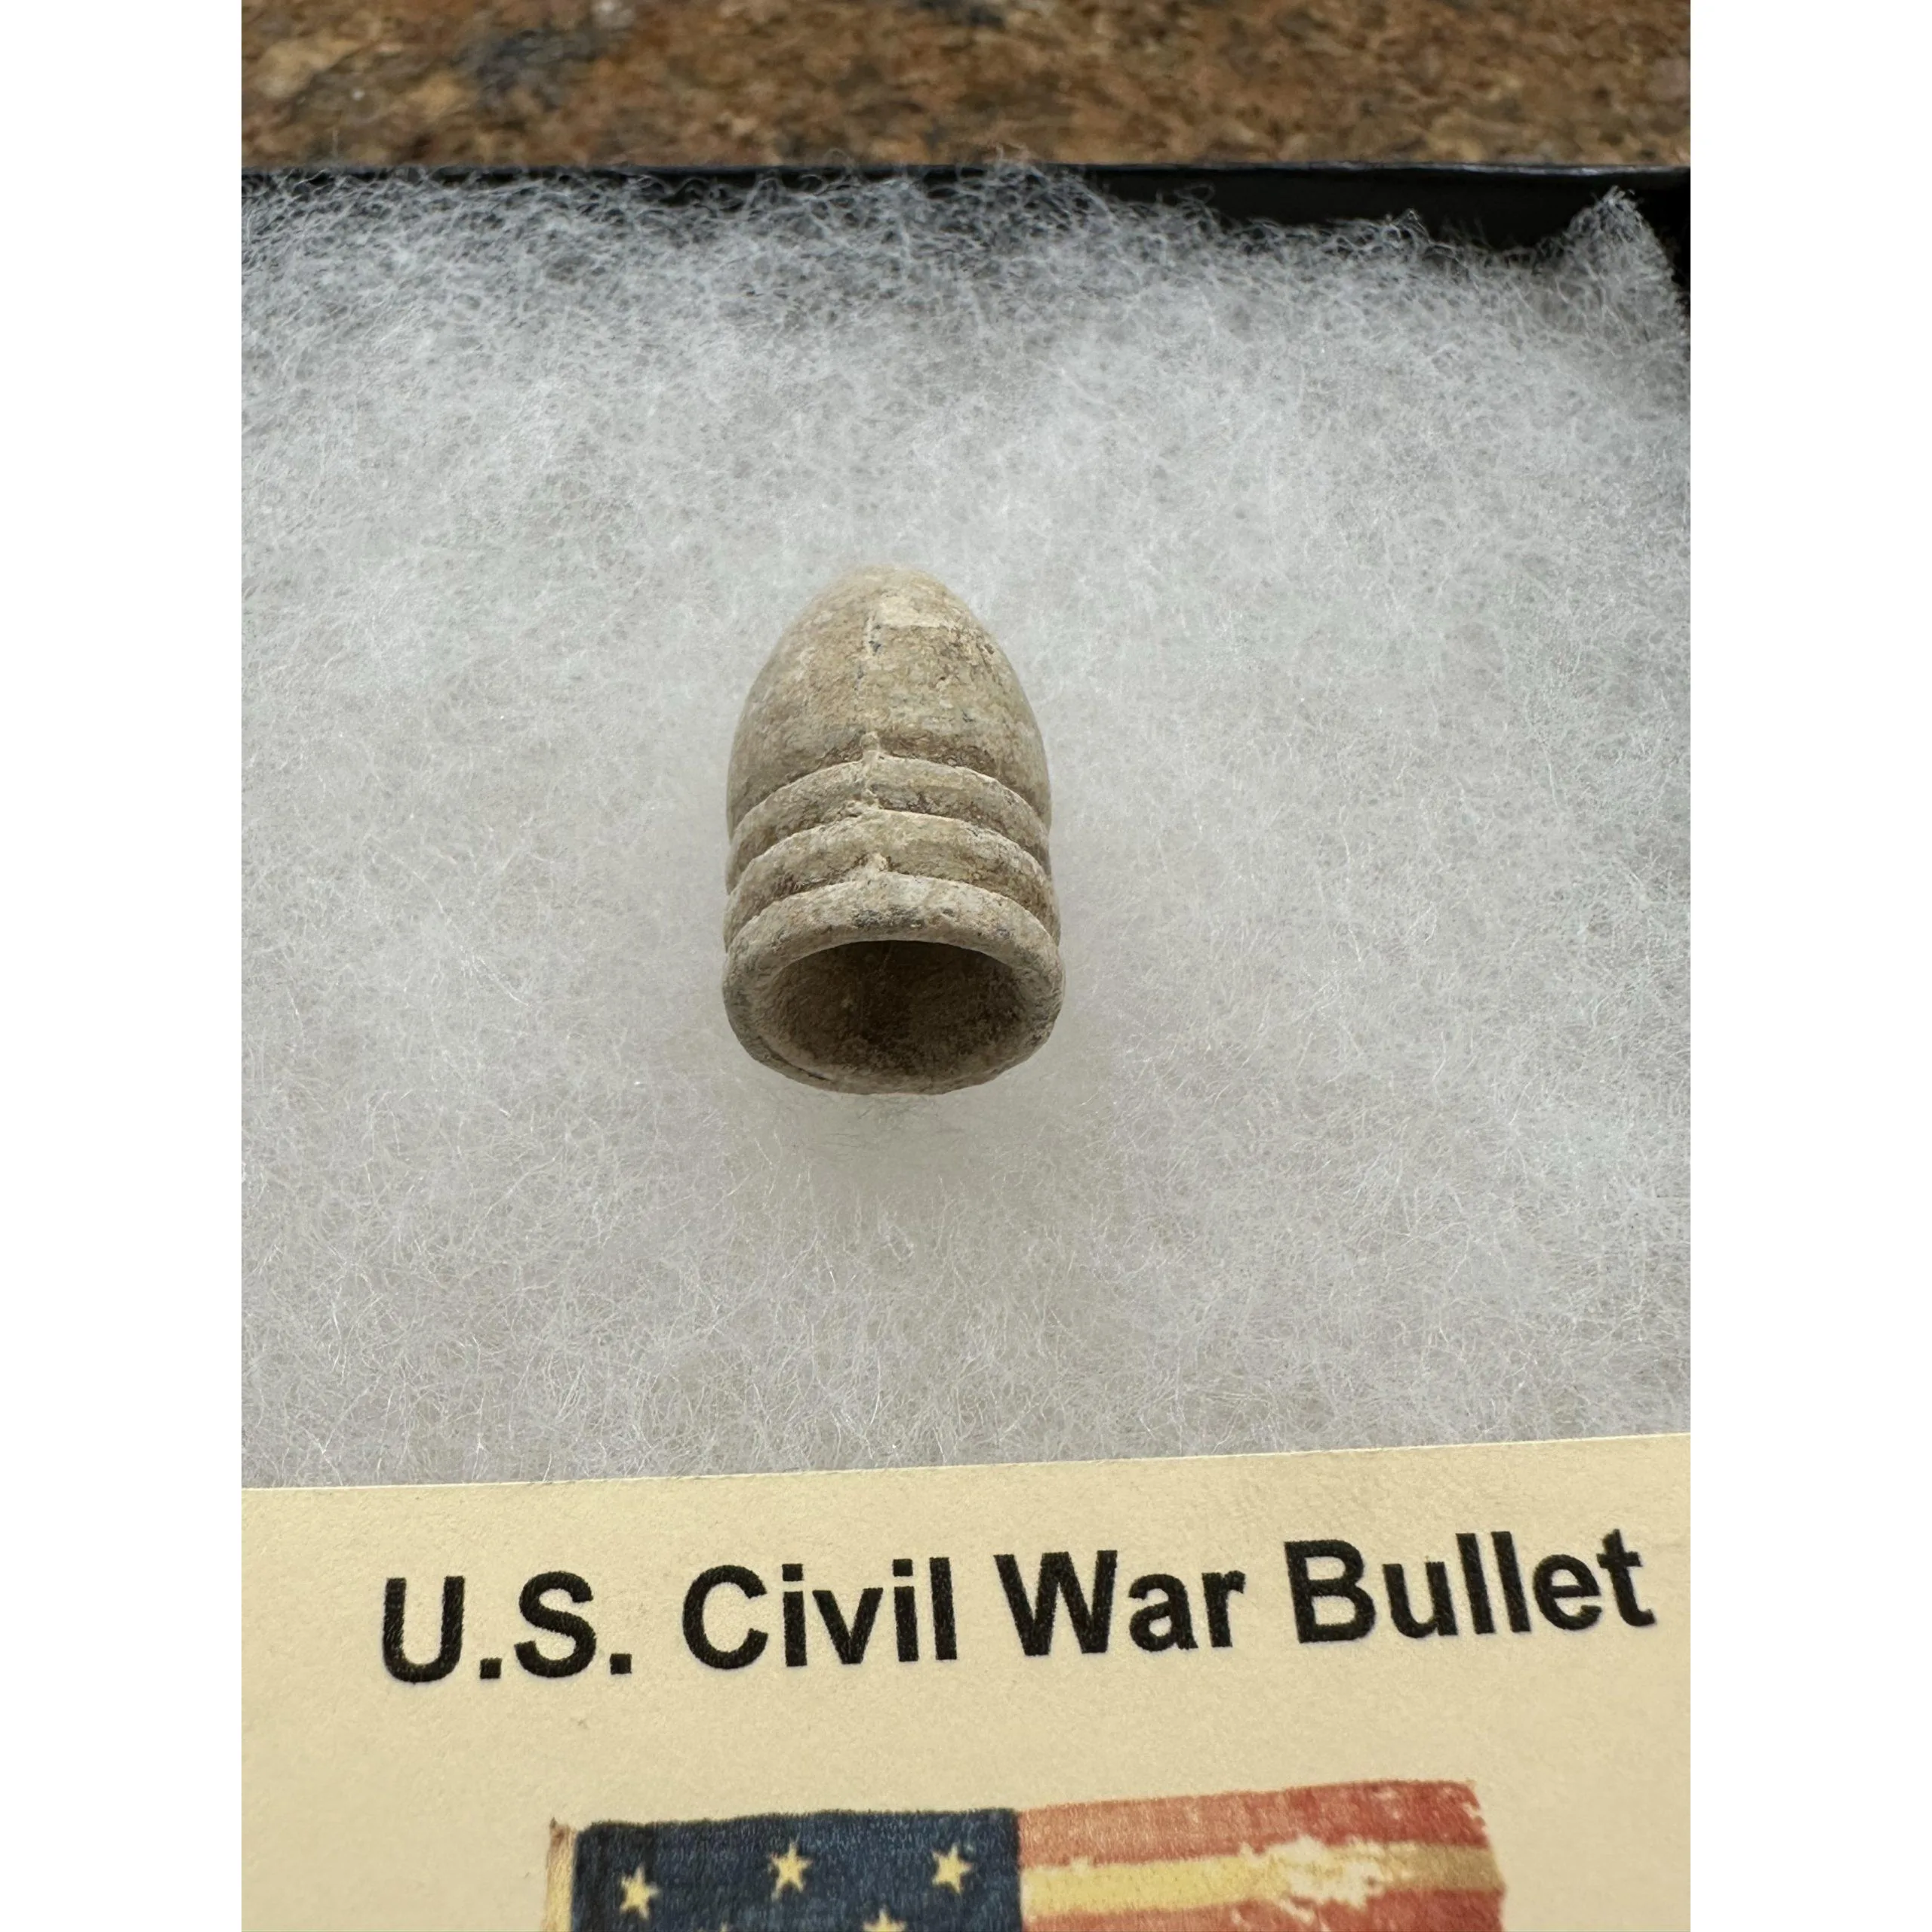 Civil War Bullet, very detailed, well preserved, Virginia Prehistoric Online